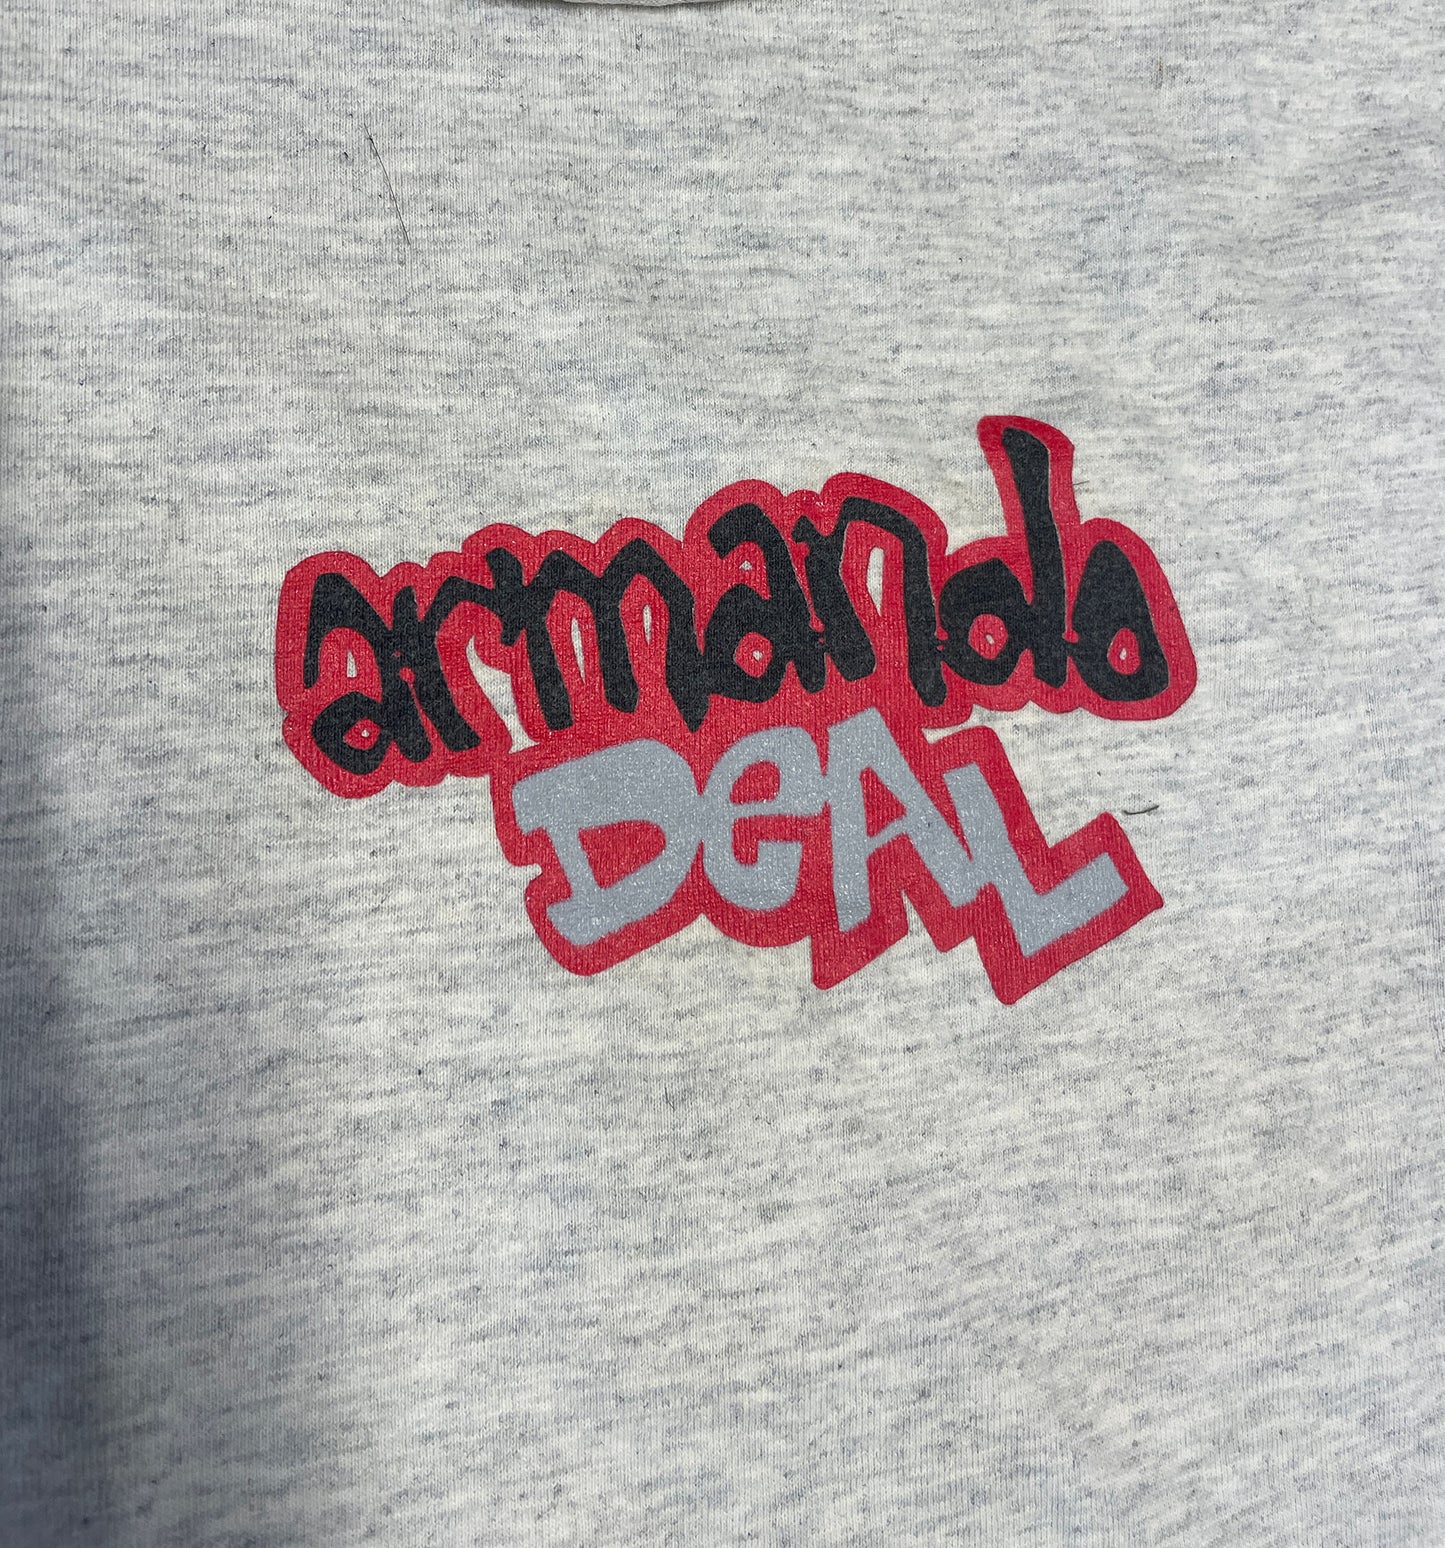 New Deal Armando Barajas 'Devil Woman' T-Shirt (Grey) VINTAGE 90s